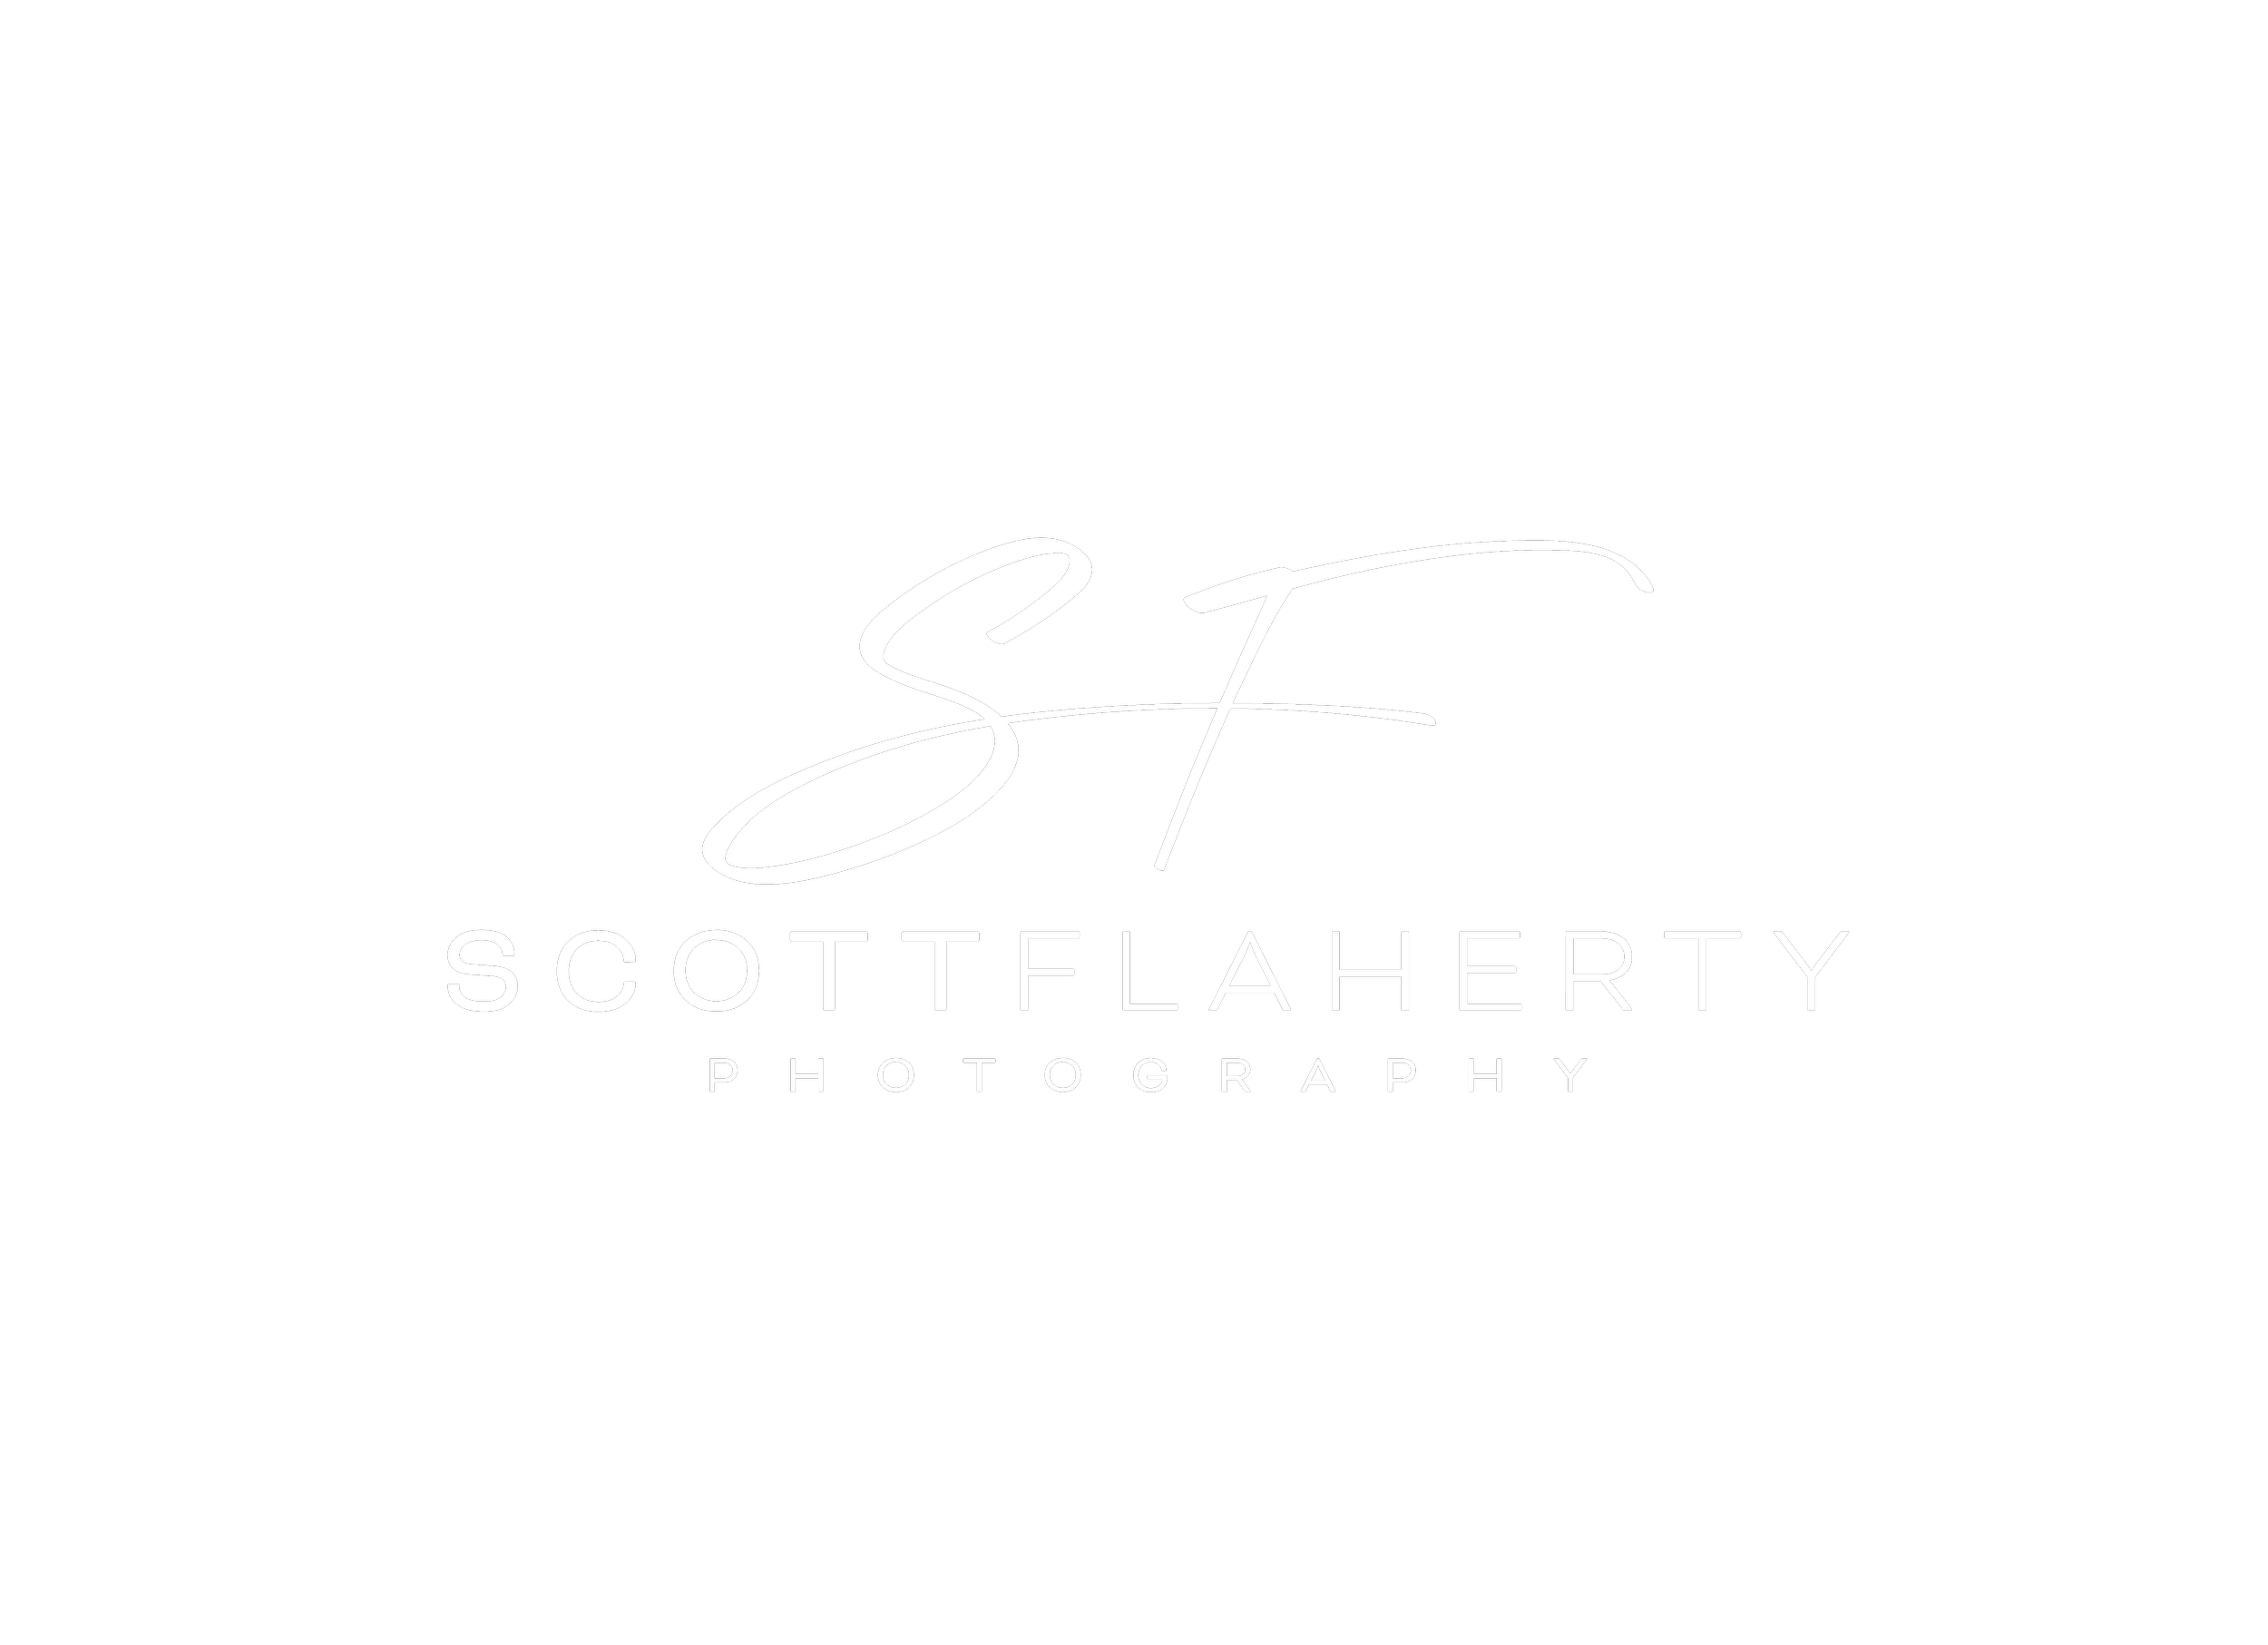 Scott Flaherty Photography